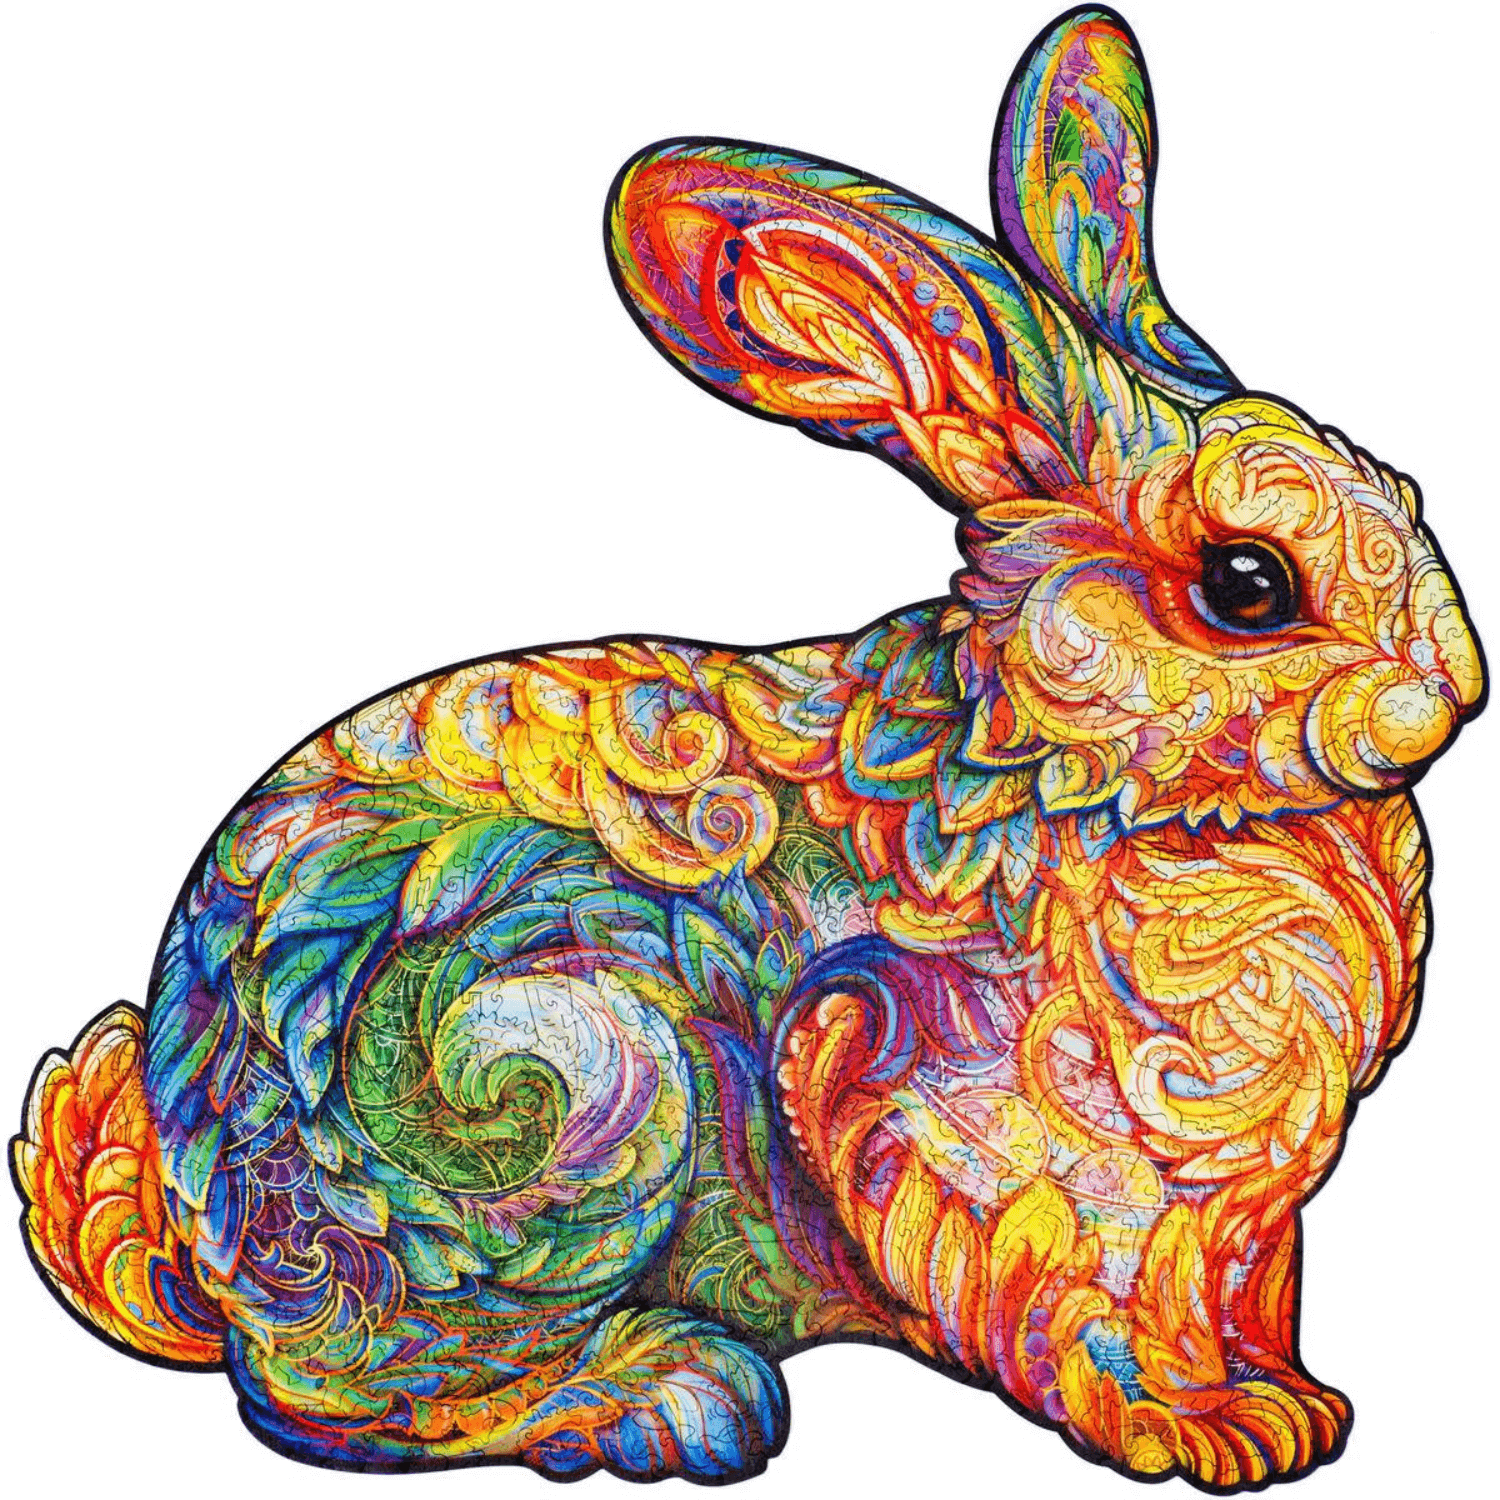 Precious Rabbit Wooden Puzzle-Unidragon-precious-rabbit-s-4640157452862